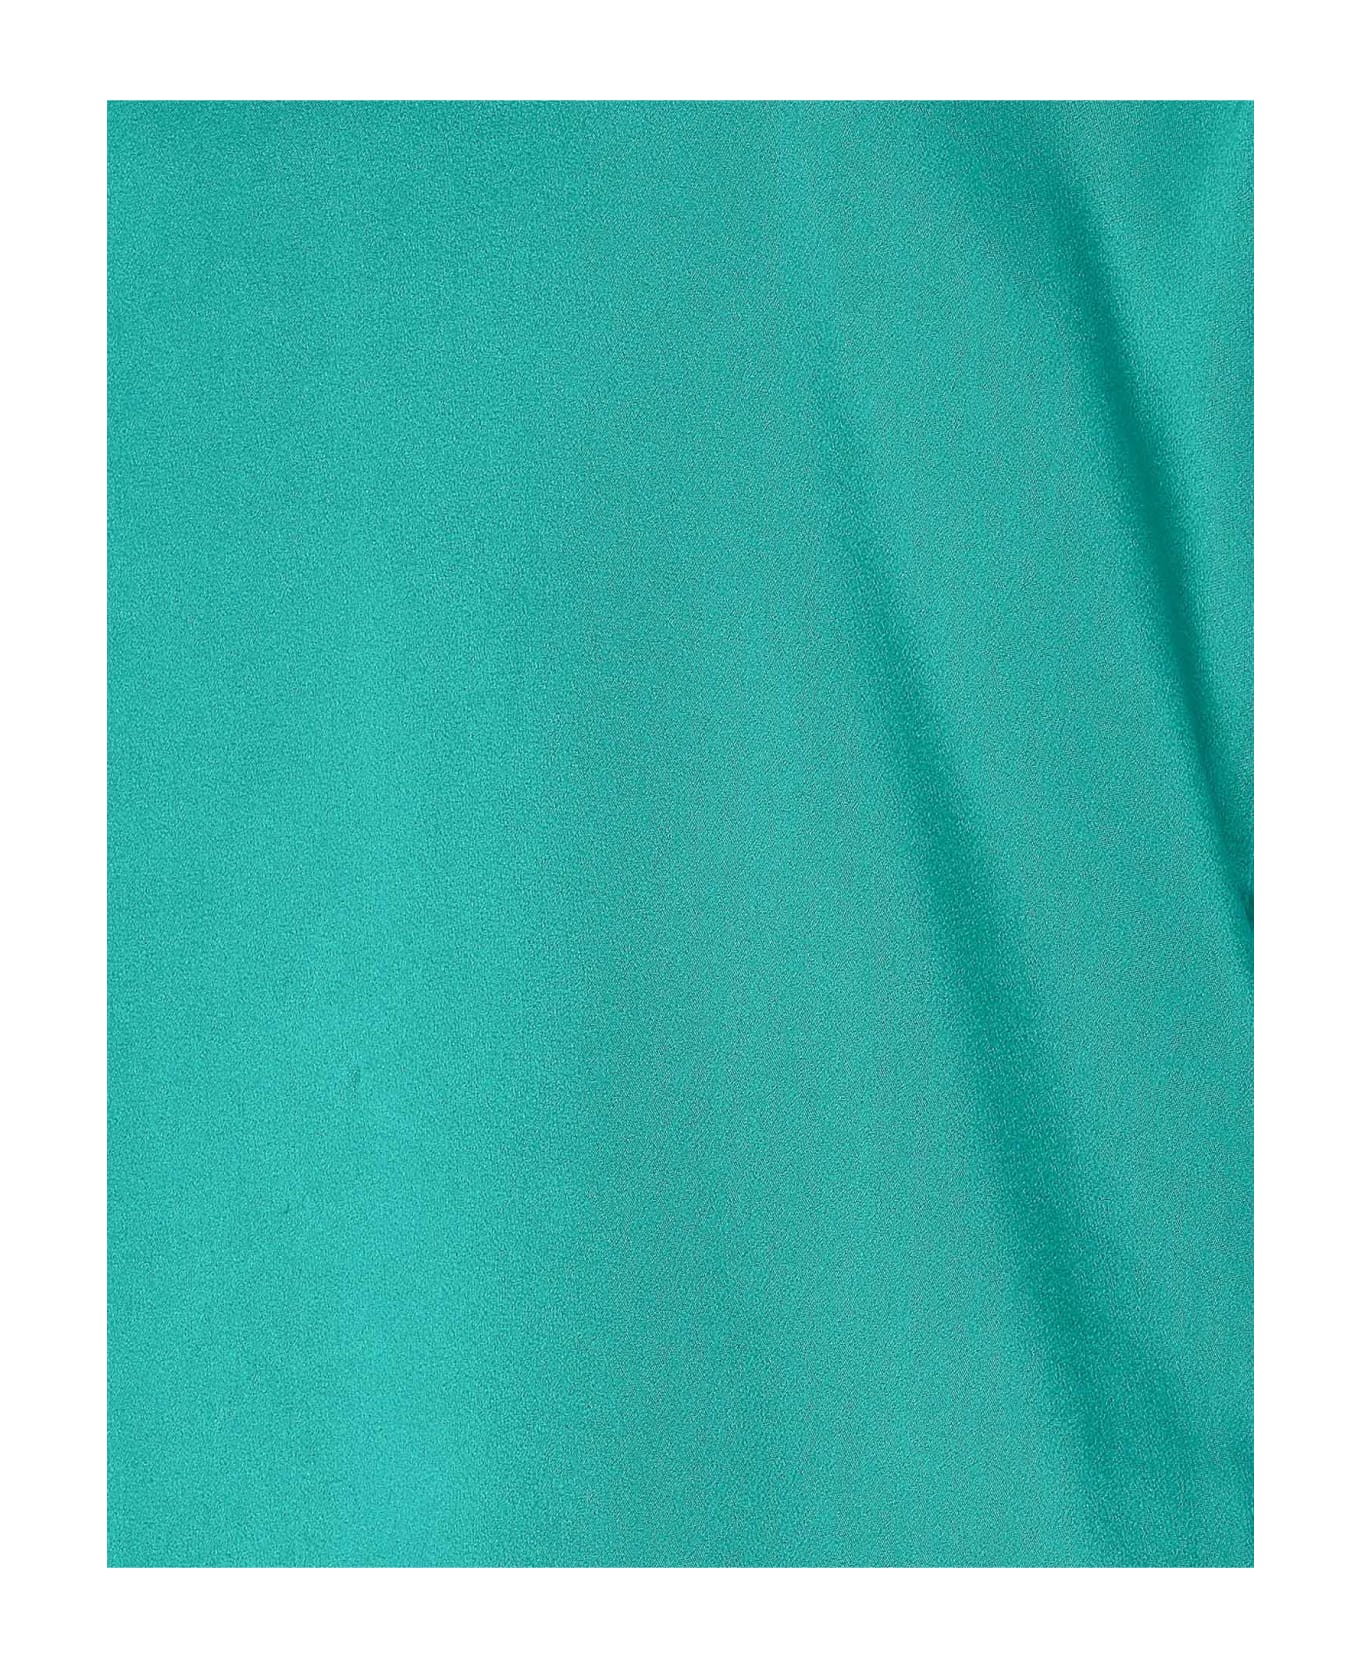 Liu-Jo T-shirt - Acqua Green